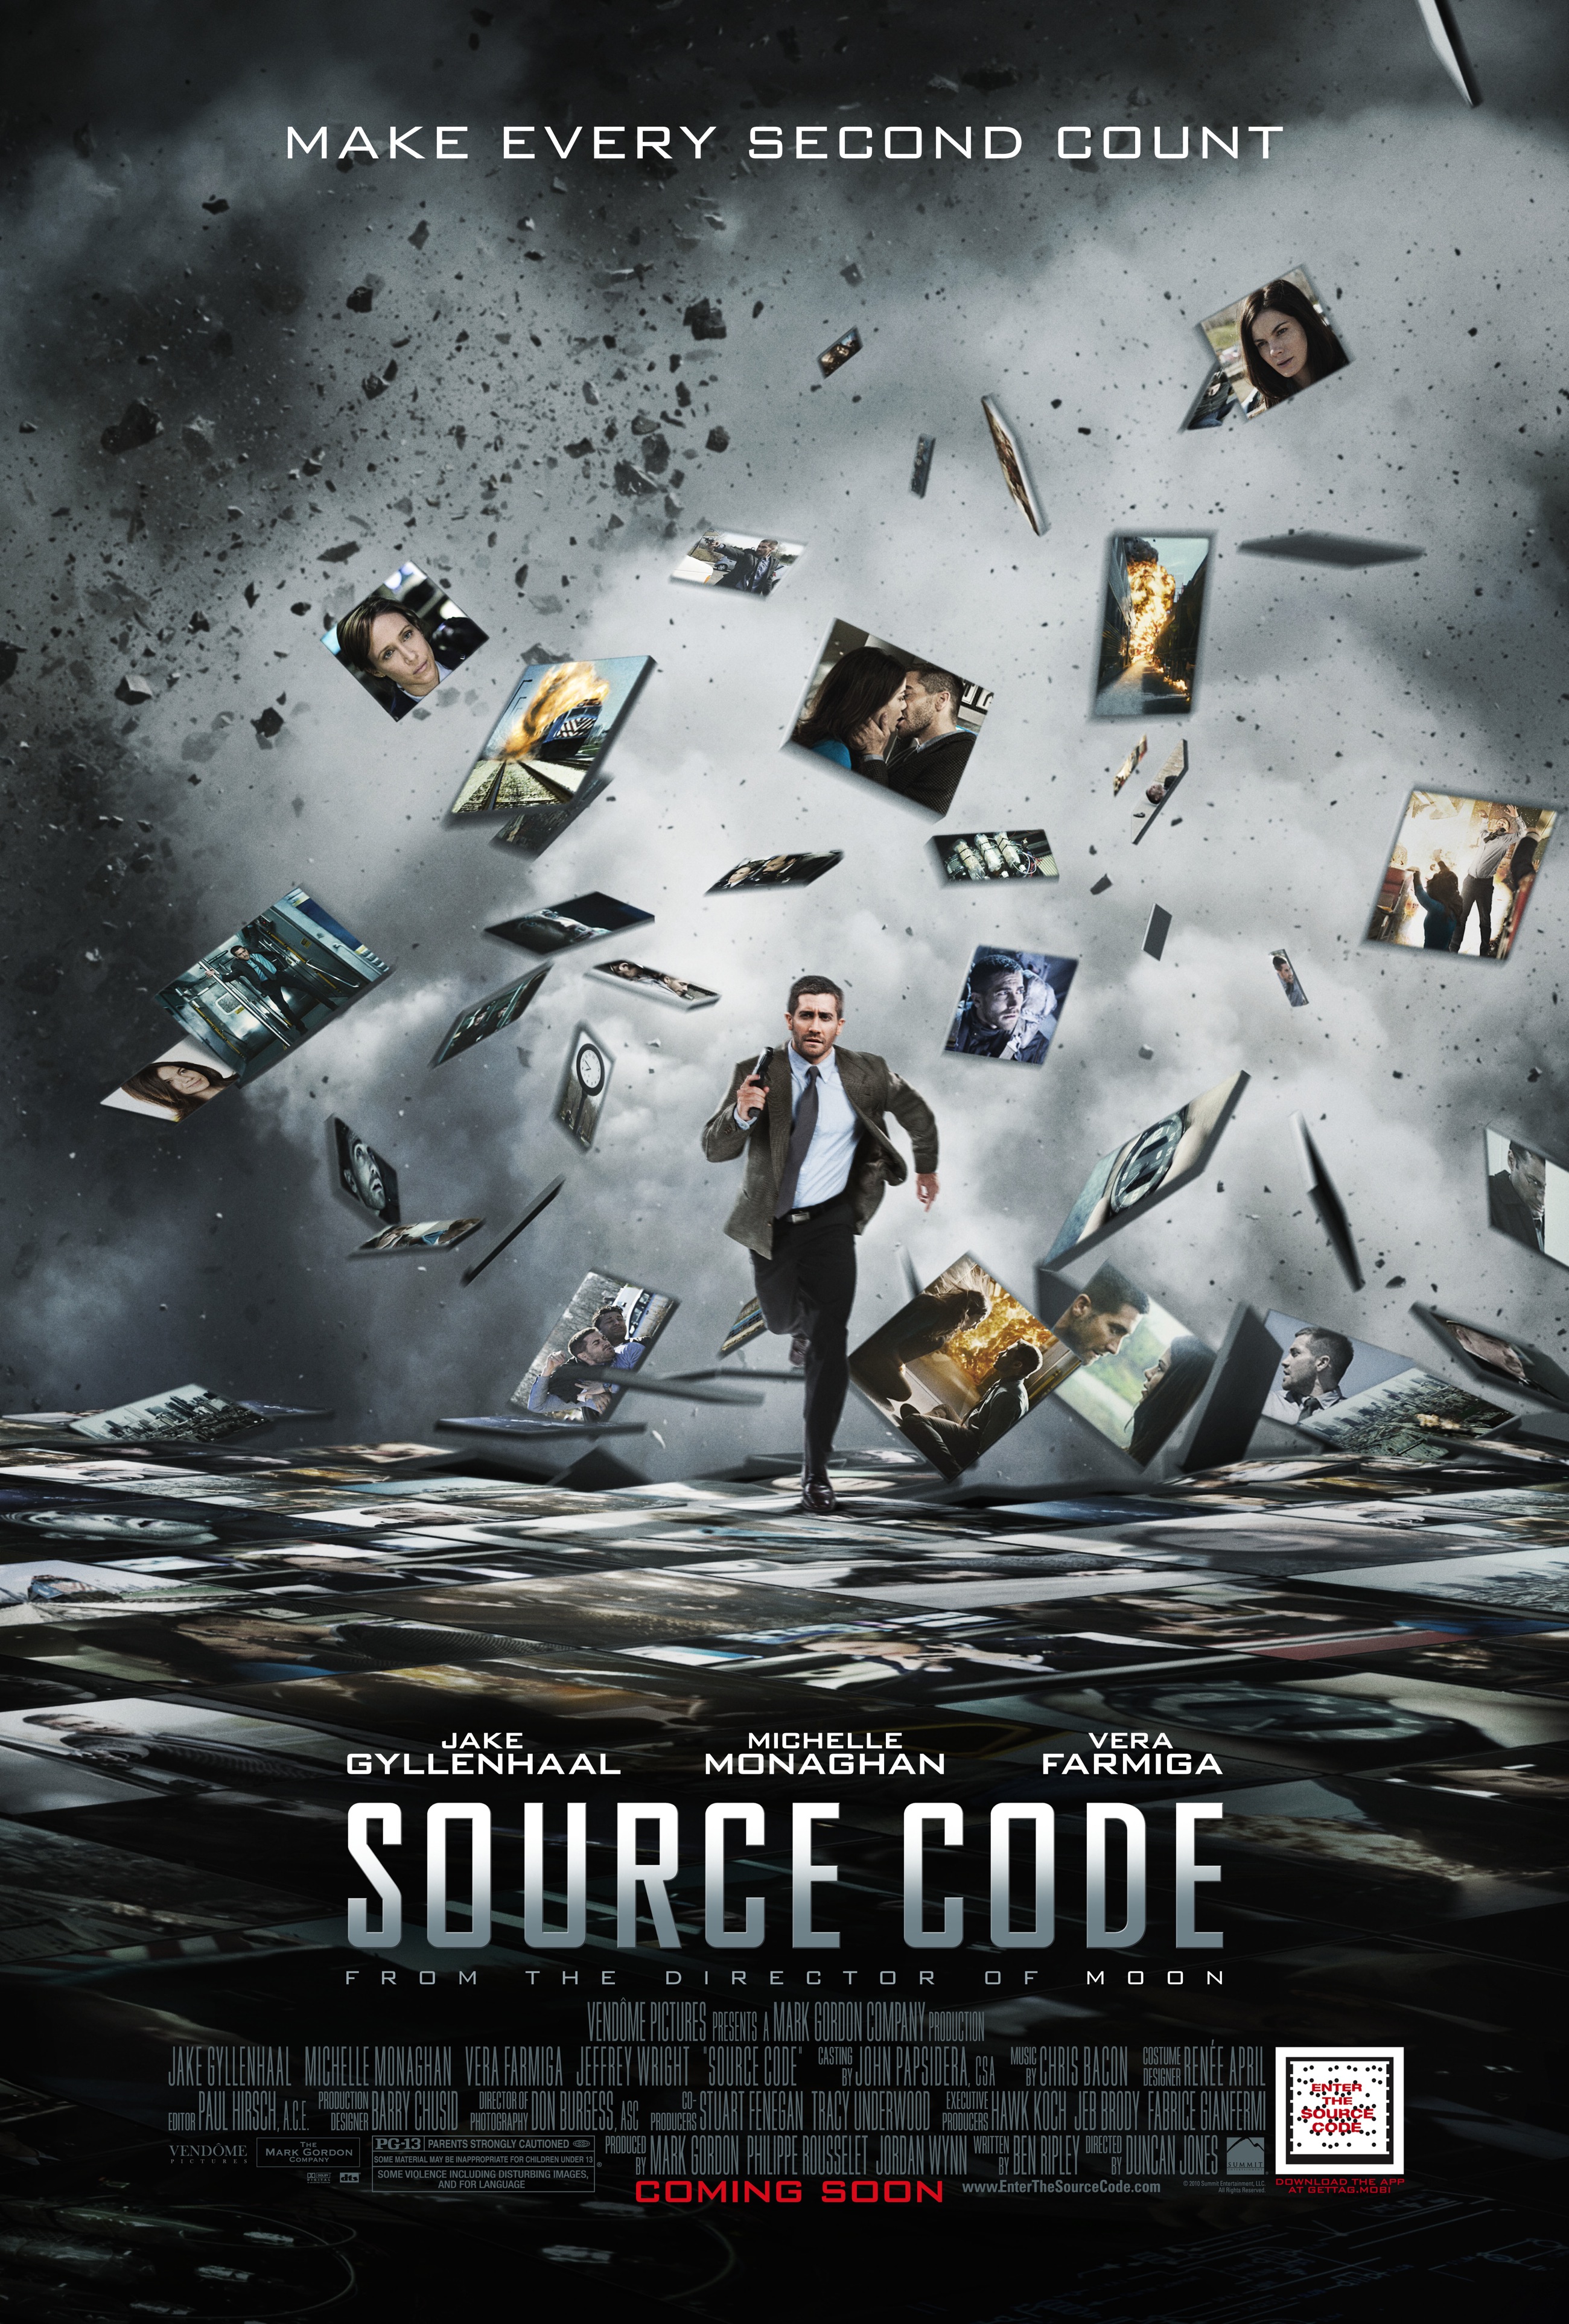 Theatrical poster for Duncan Jones’ SOURCE CODE starring Jake